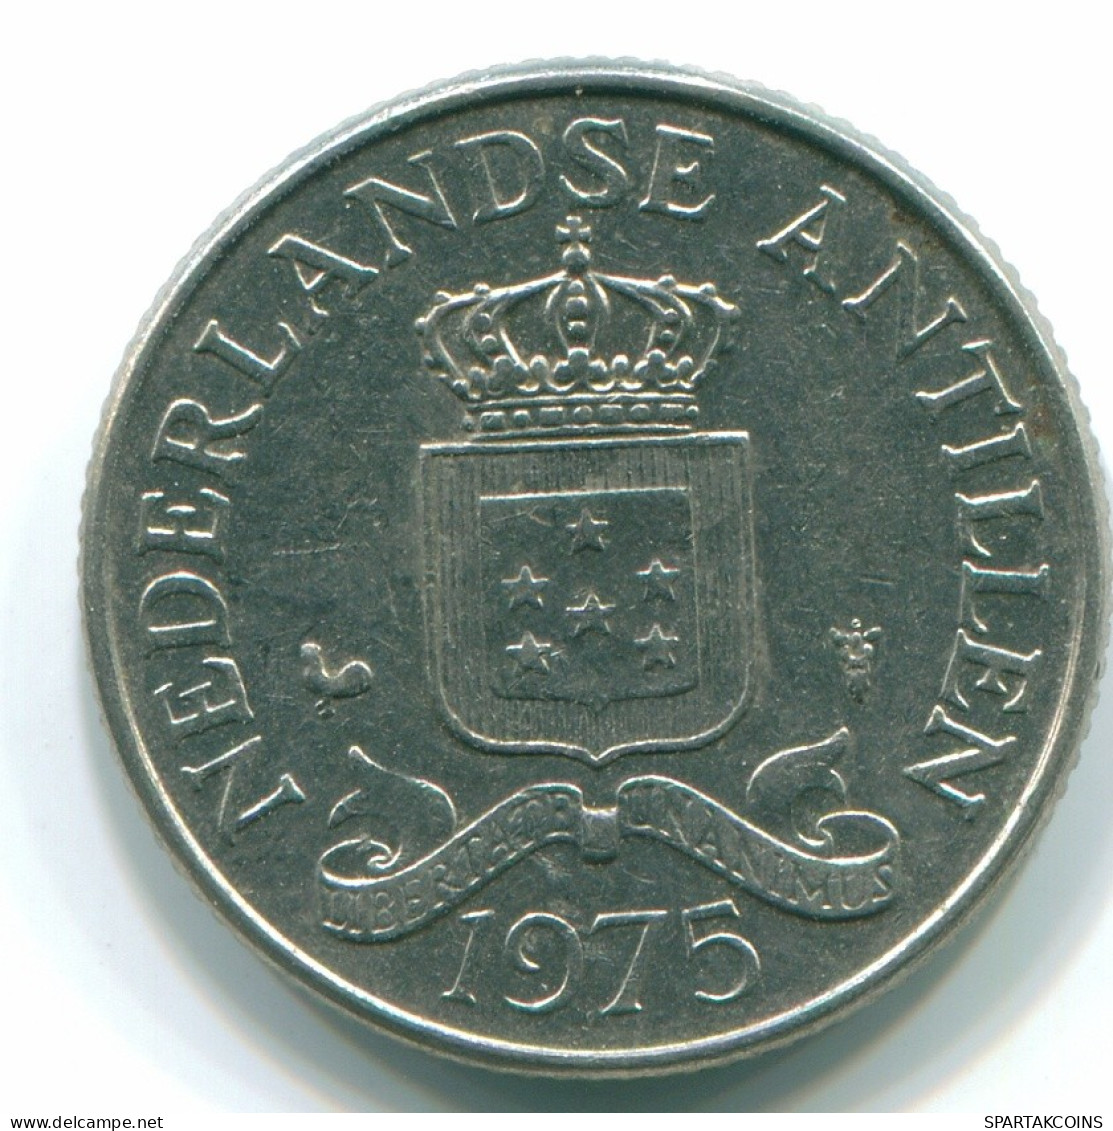 25 CENTS 1975 NETHERLANDS ANTILLES Nickel Colonial Coin #S11605.U.A - Antilles Néerlandaises